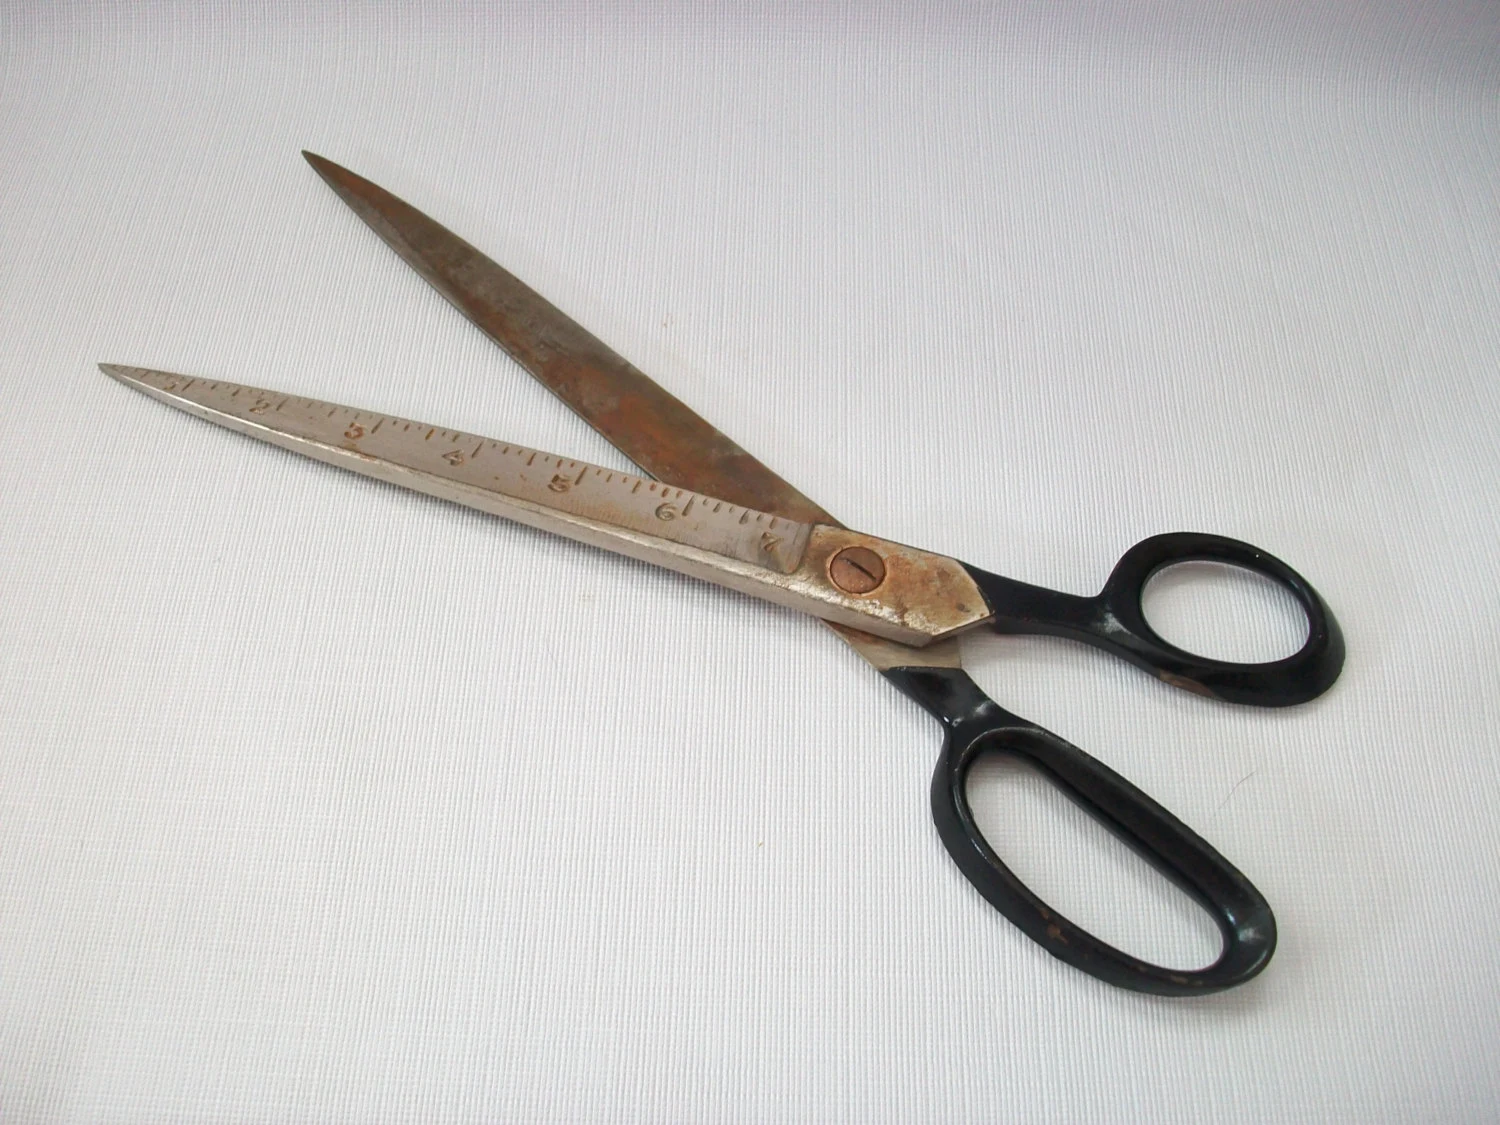 Tailoring/Sewing scissors